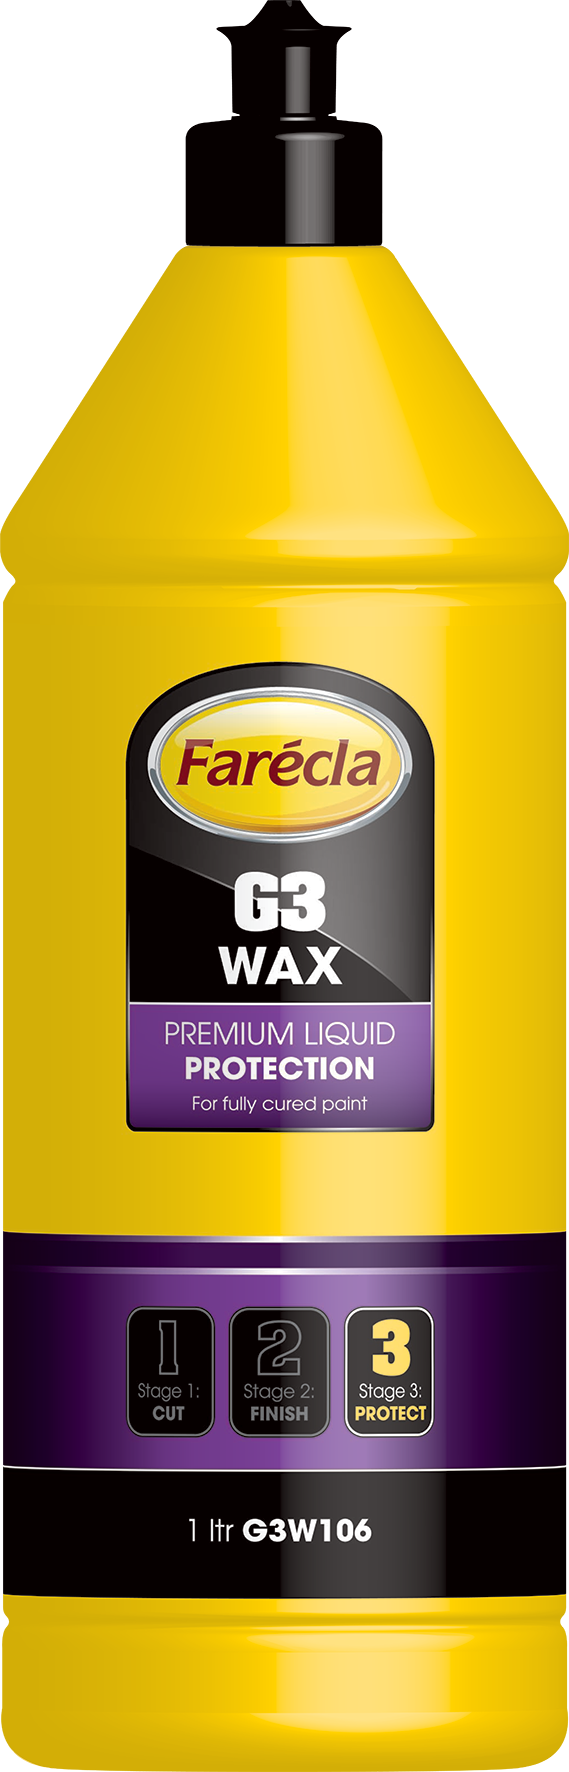 Farecla G3 Wax Premium Liquid Protection 1L